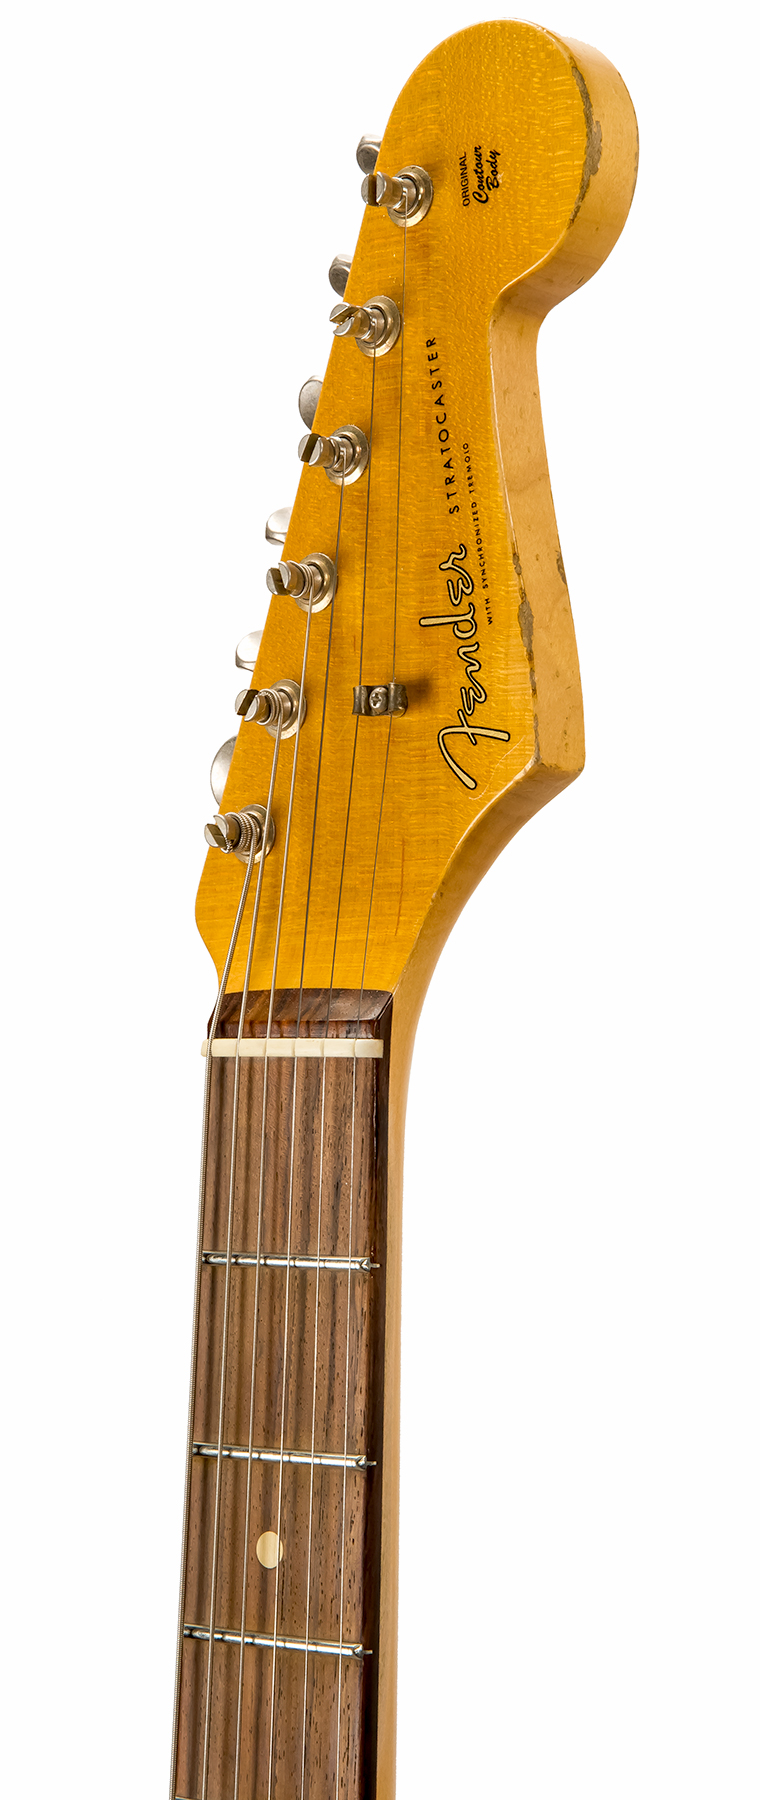 Fender Custom Shop Strat 1960 Rw #cz544406 - Relic Aztec Gold - Str shape electric guitar - Variation 5